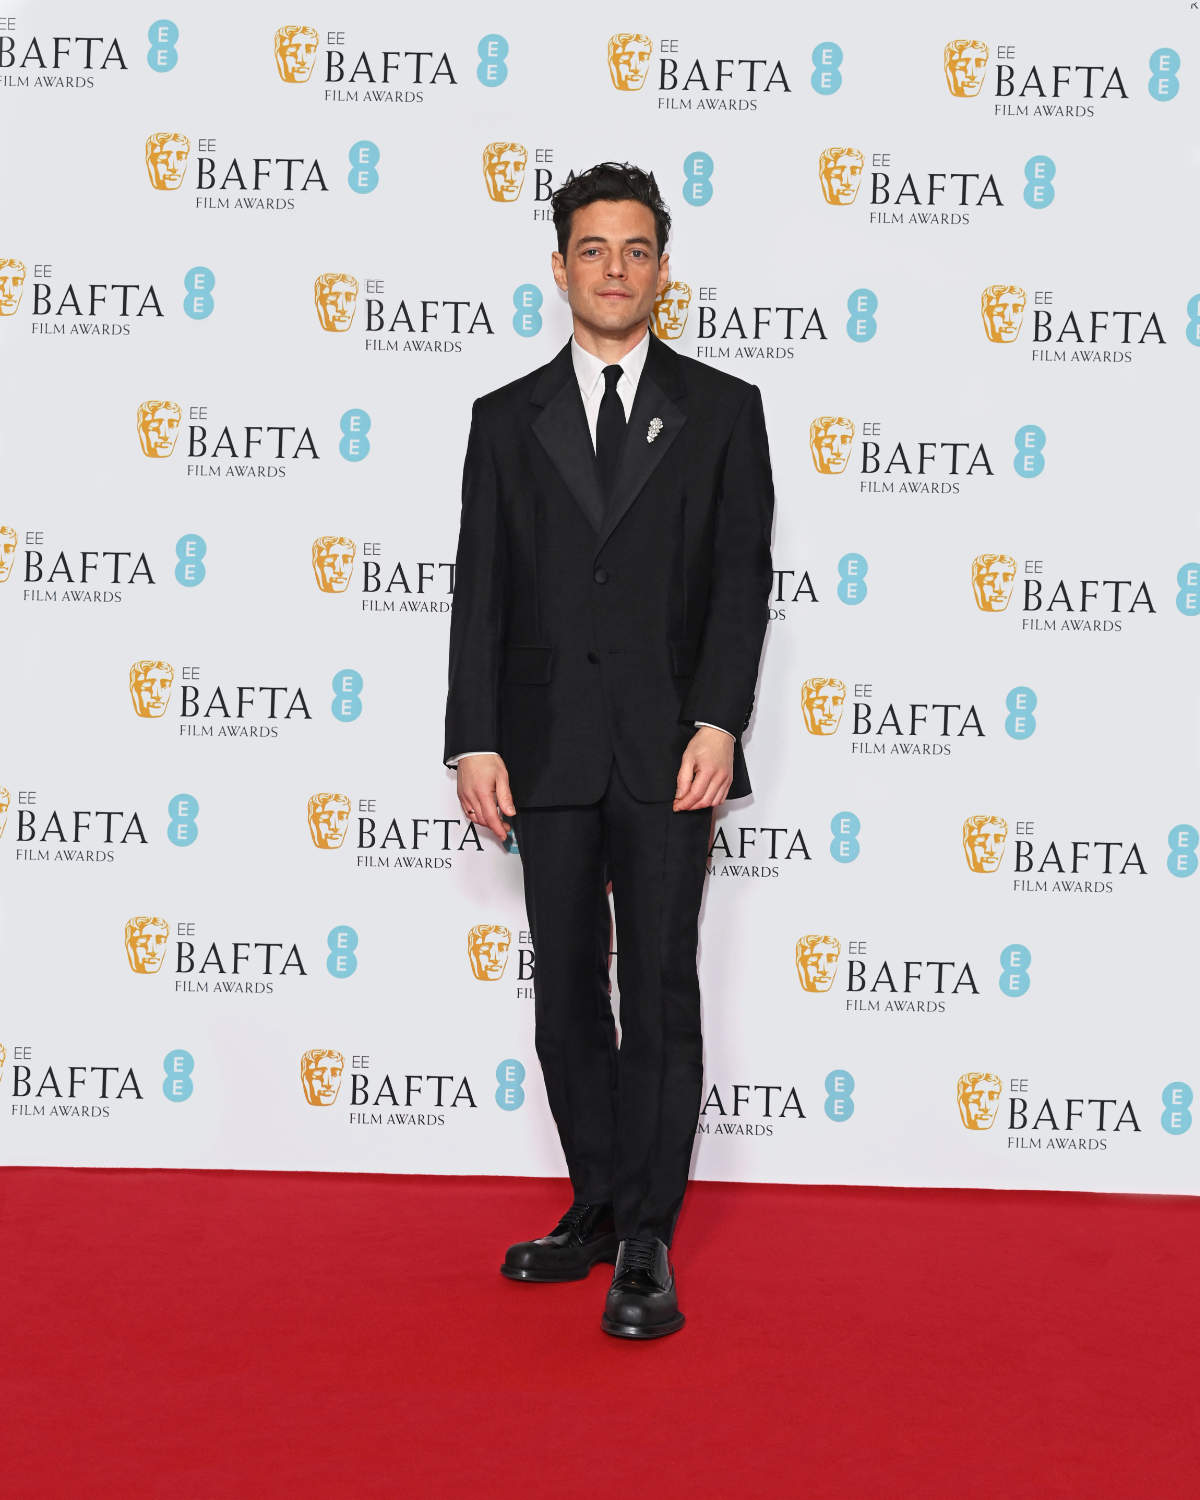 PRADA At The 76th British Academy Film Awards